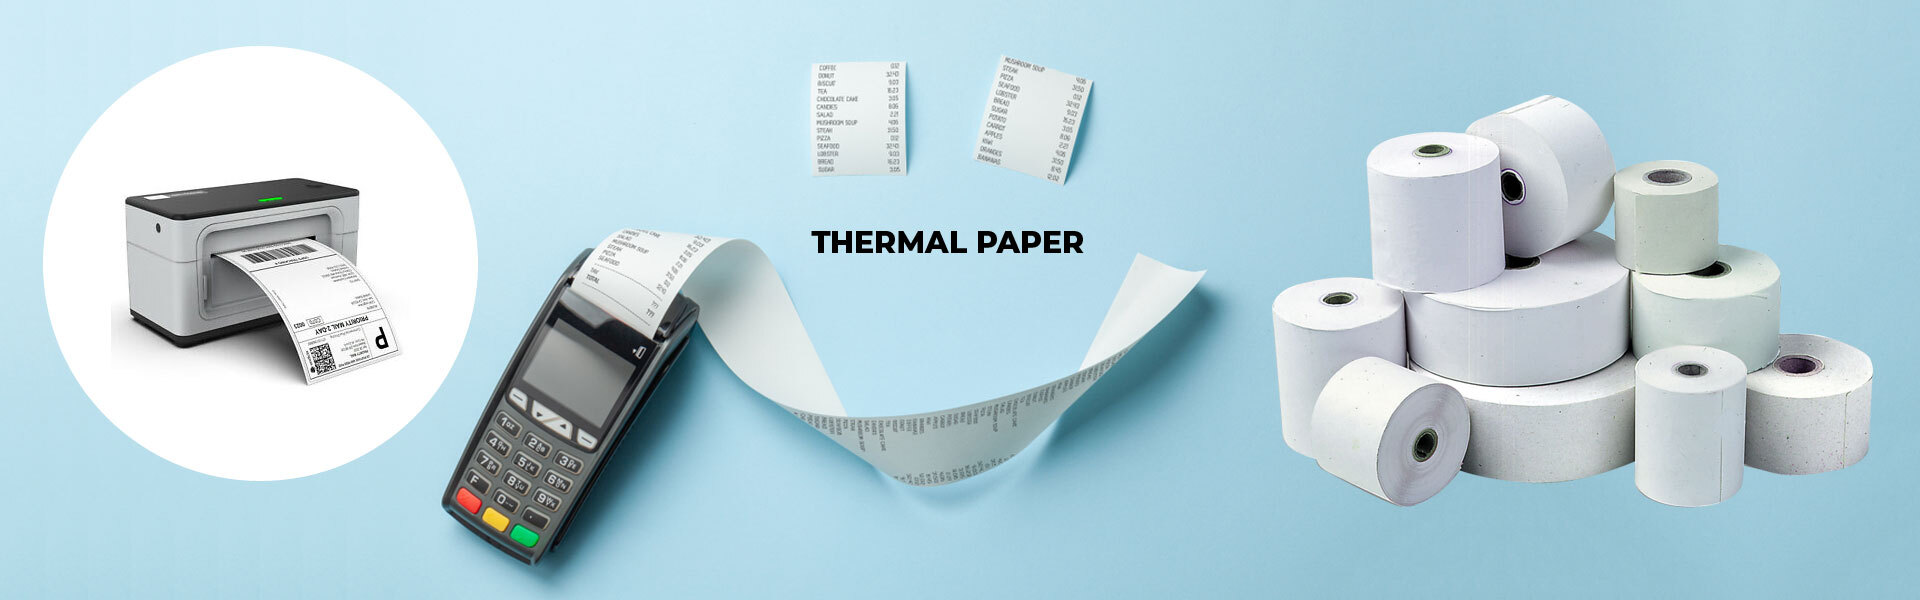 thermalpaper02